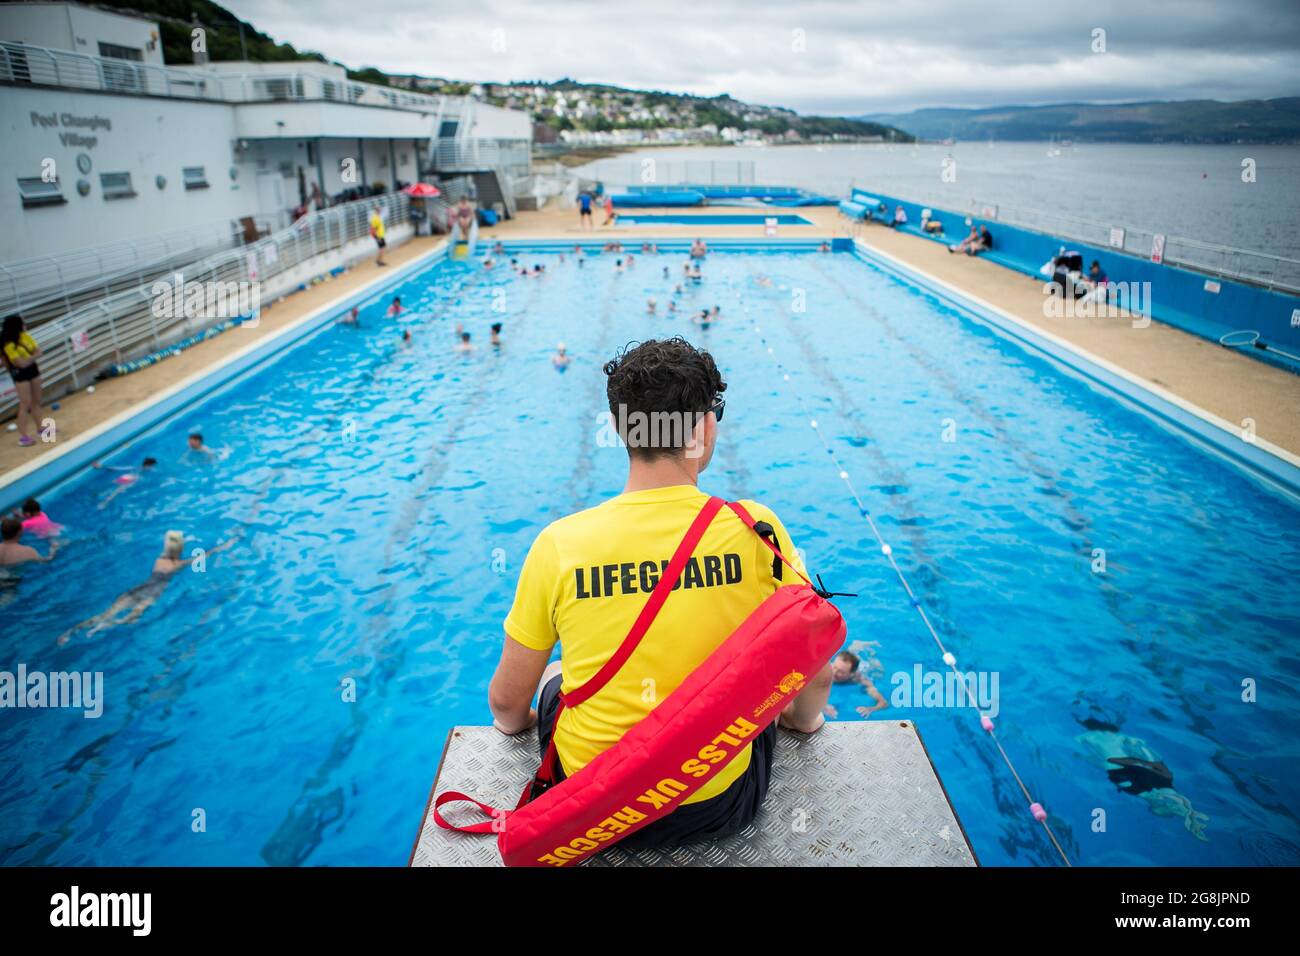 Lifeguard at Gourock outdoor swimming pool, Scotland. Stock Photo